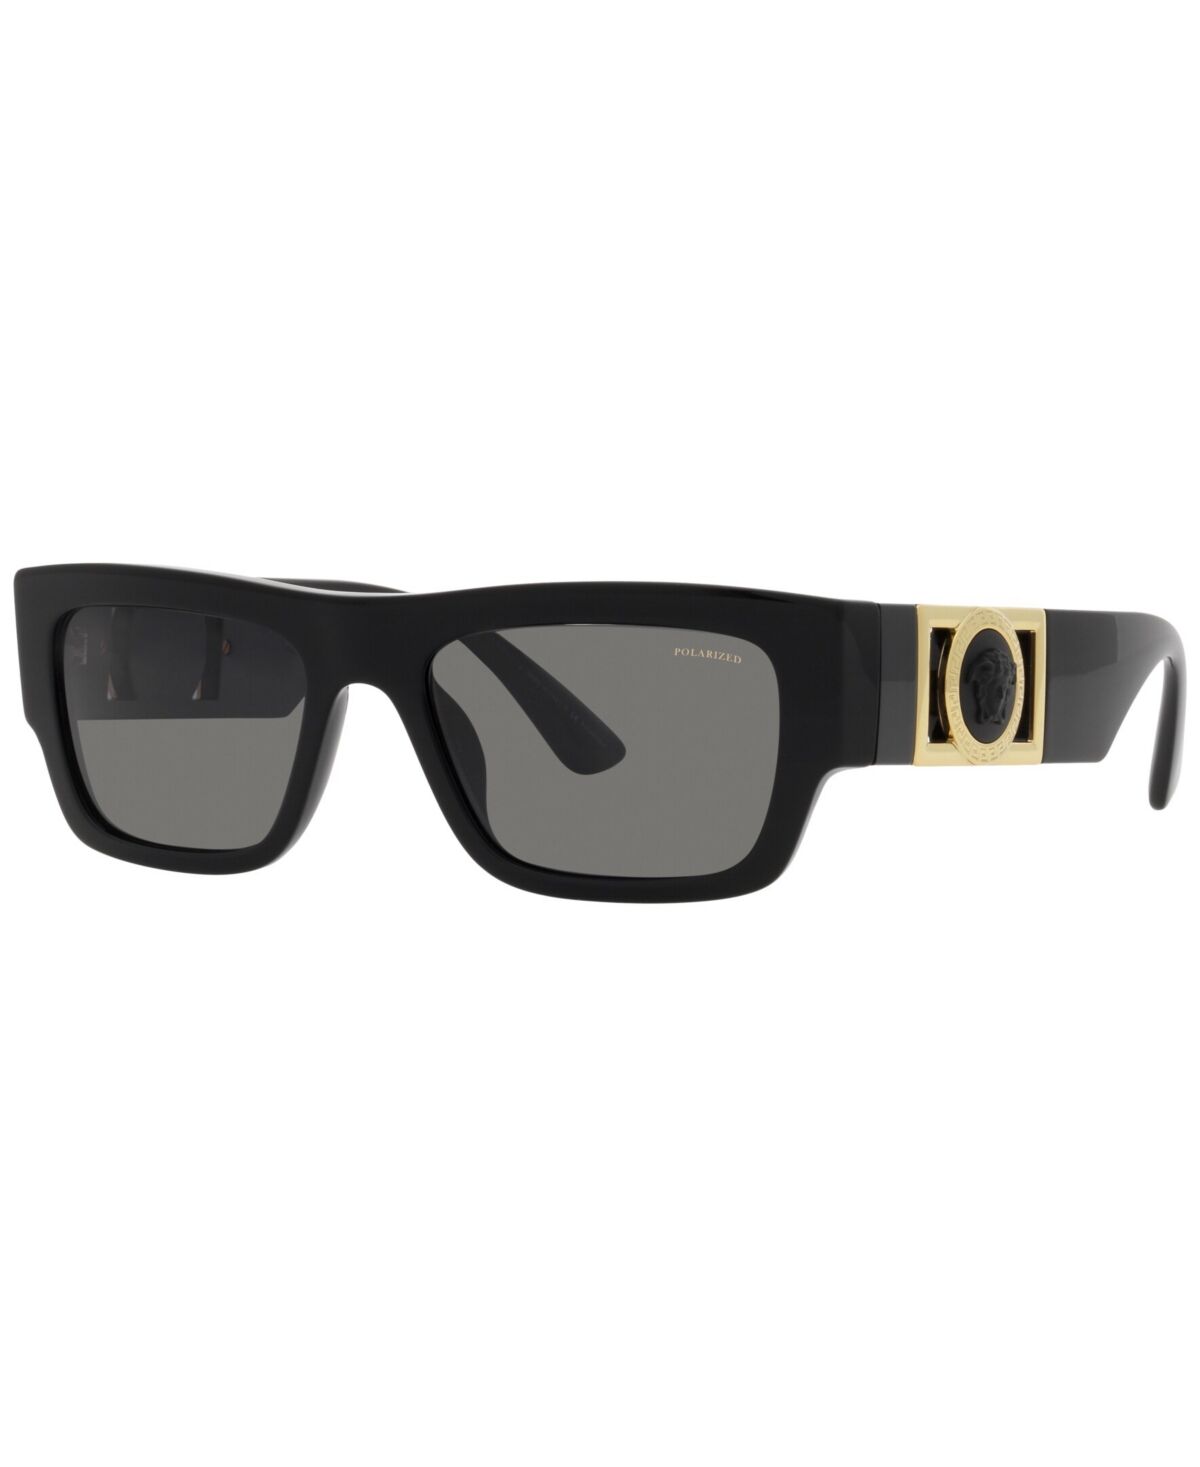 Versace Men's Polarized Sunglasses, VE4416U - Black